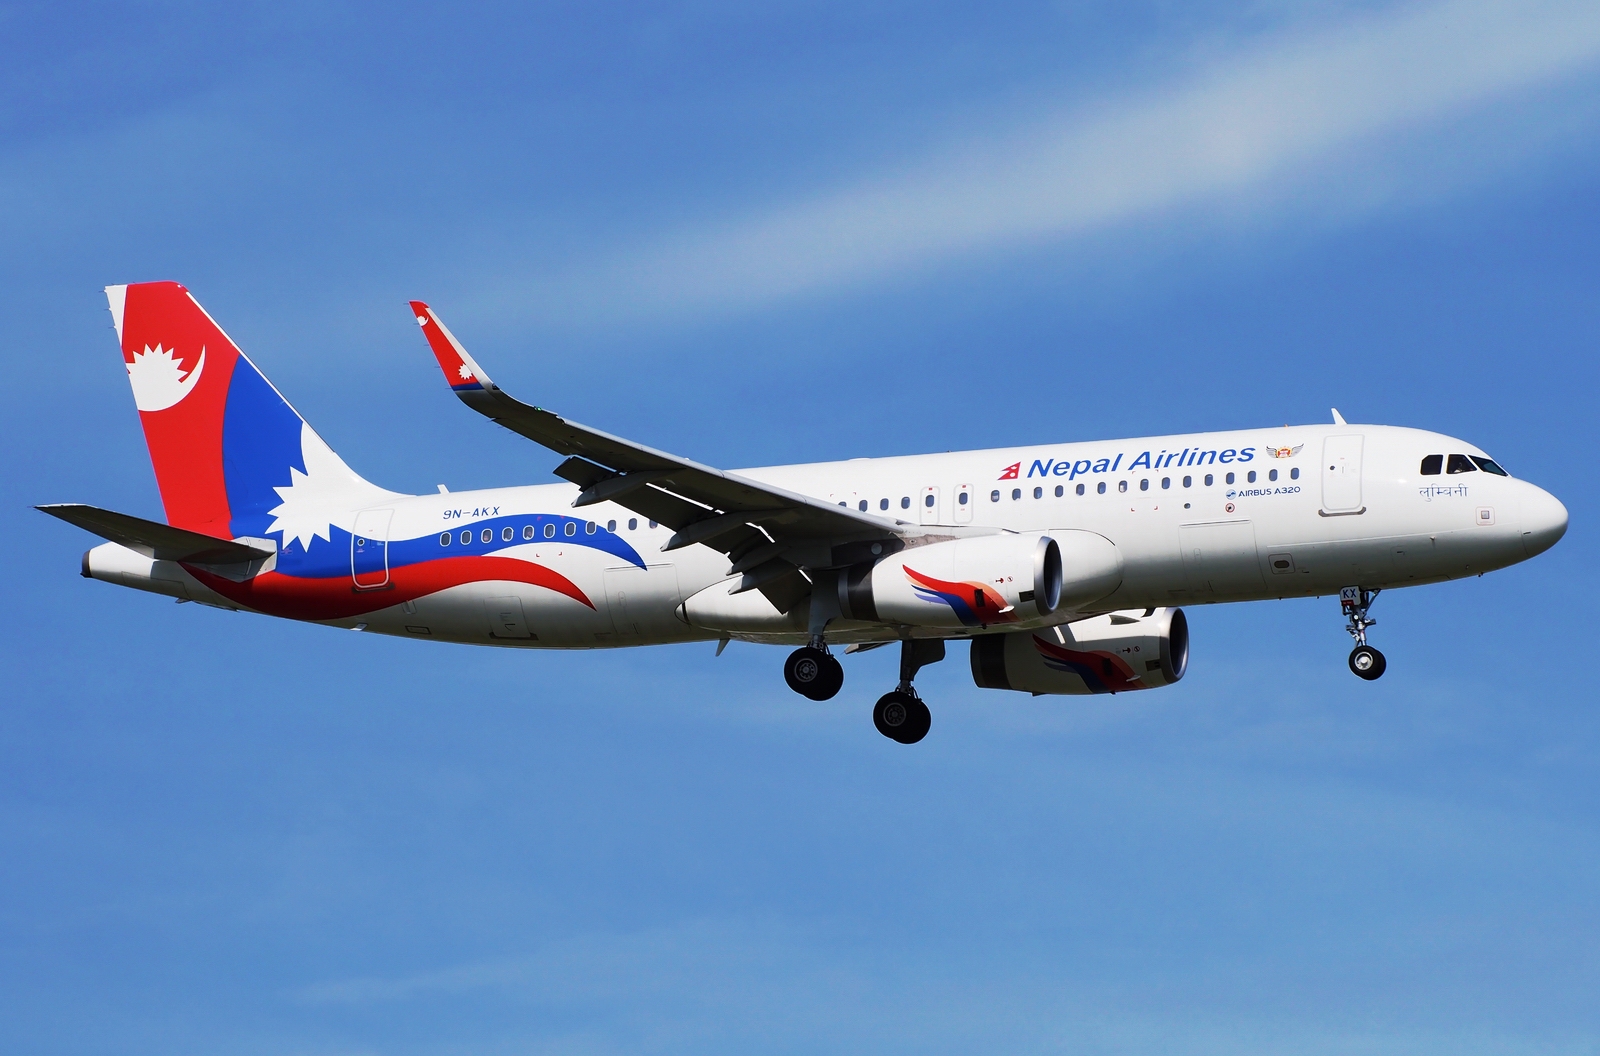 Nepal Airlines’ 9N-AKX-airbus aircraft returned to Kathmandu after maintenance in Israel